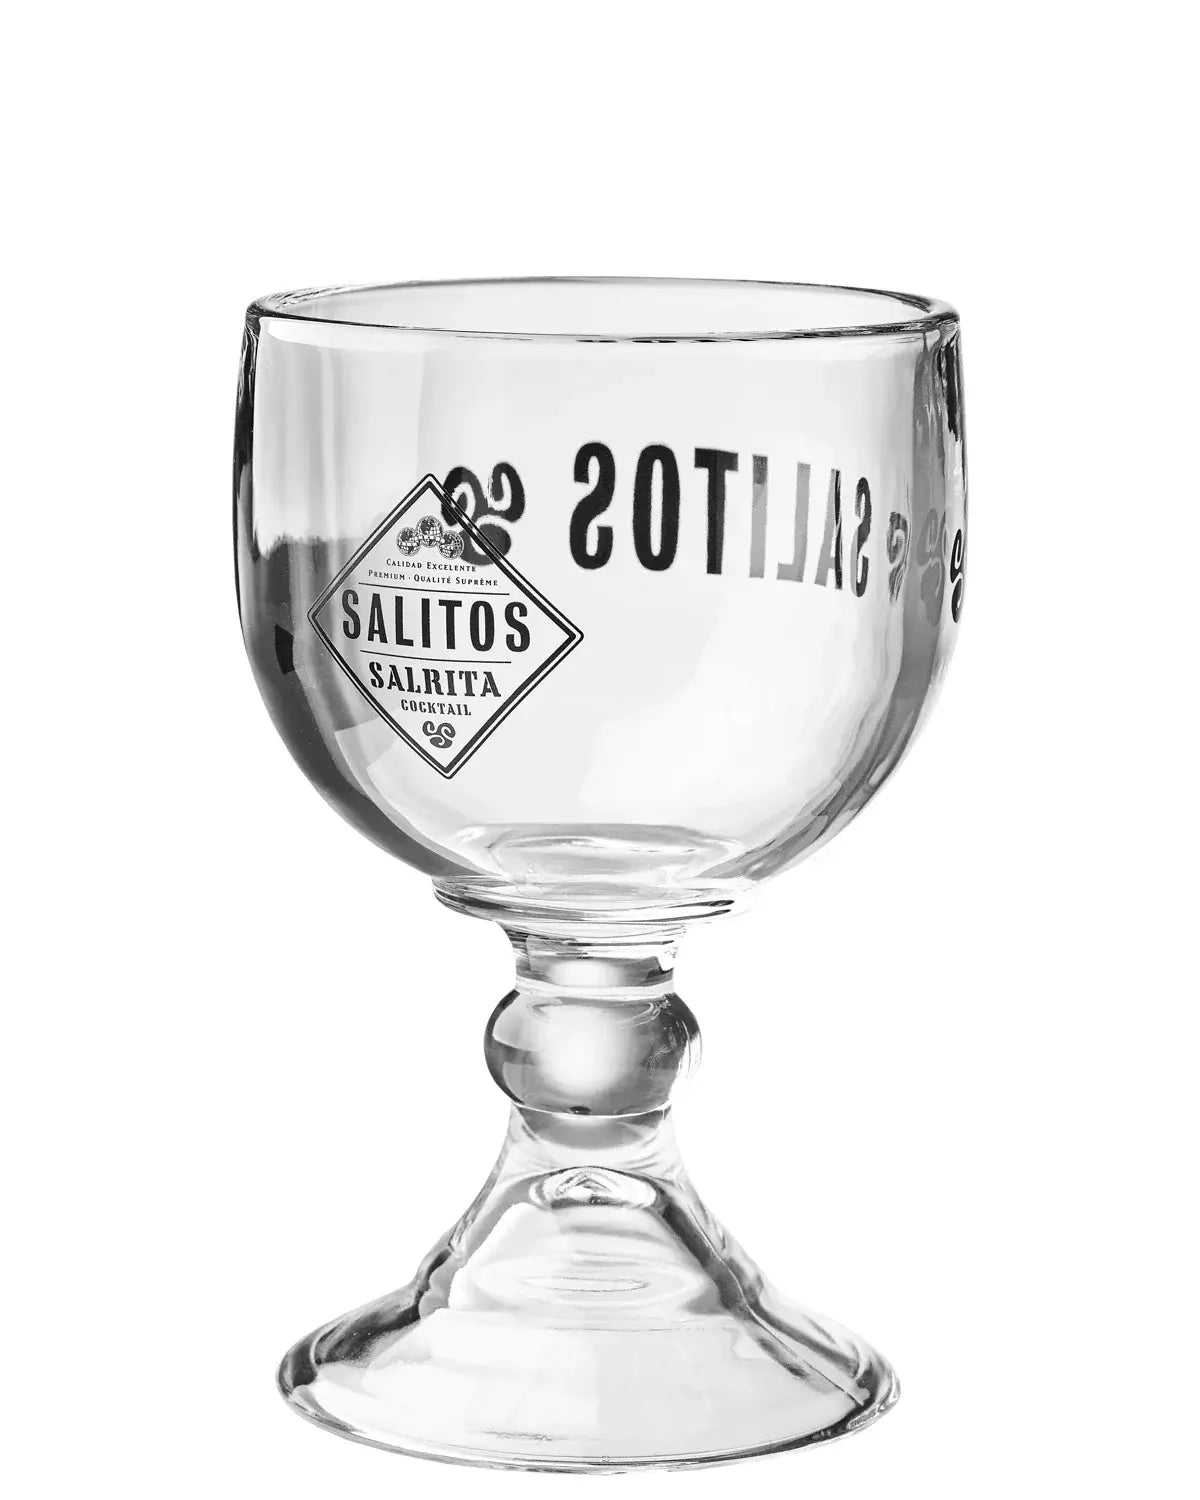 Ein SALITOS Salrita Cocktailglas